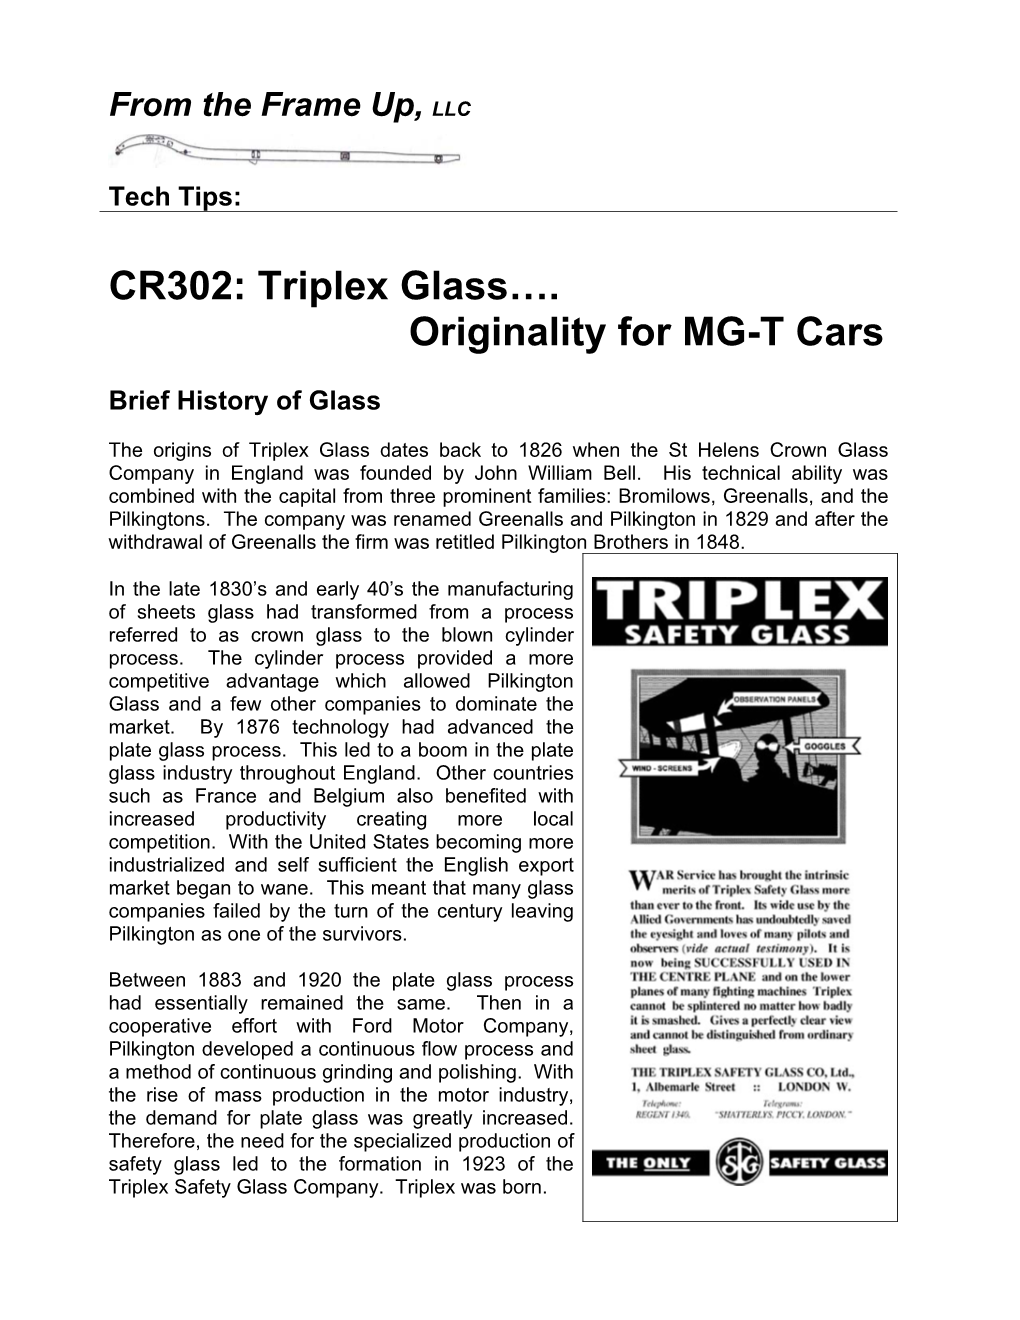 CR302: Triplex Glass…. Originality for MG-T Cars